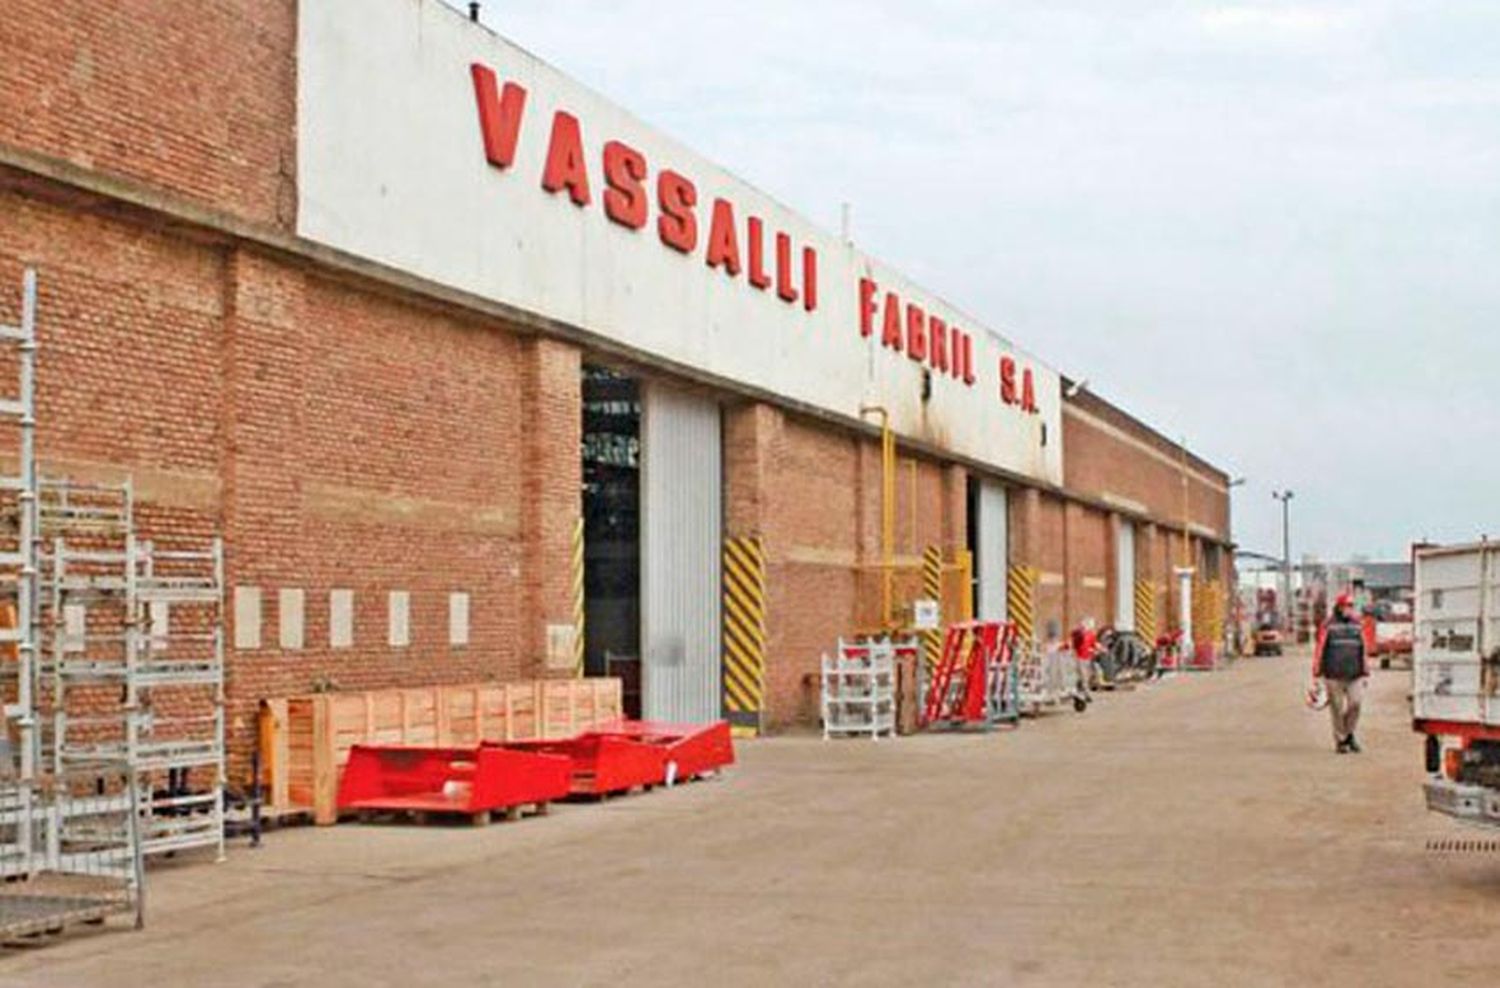 Triste Navidad en Firmat: 52 despidos en la fábrica Vassalli